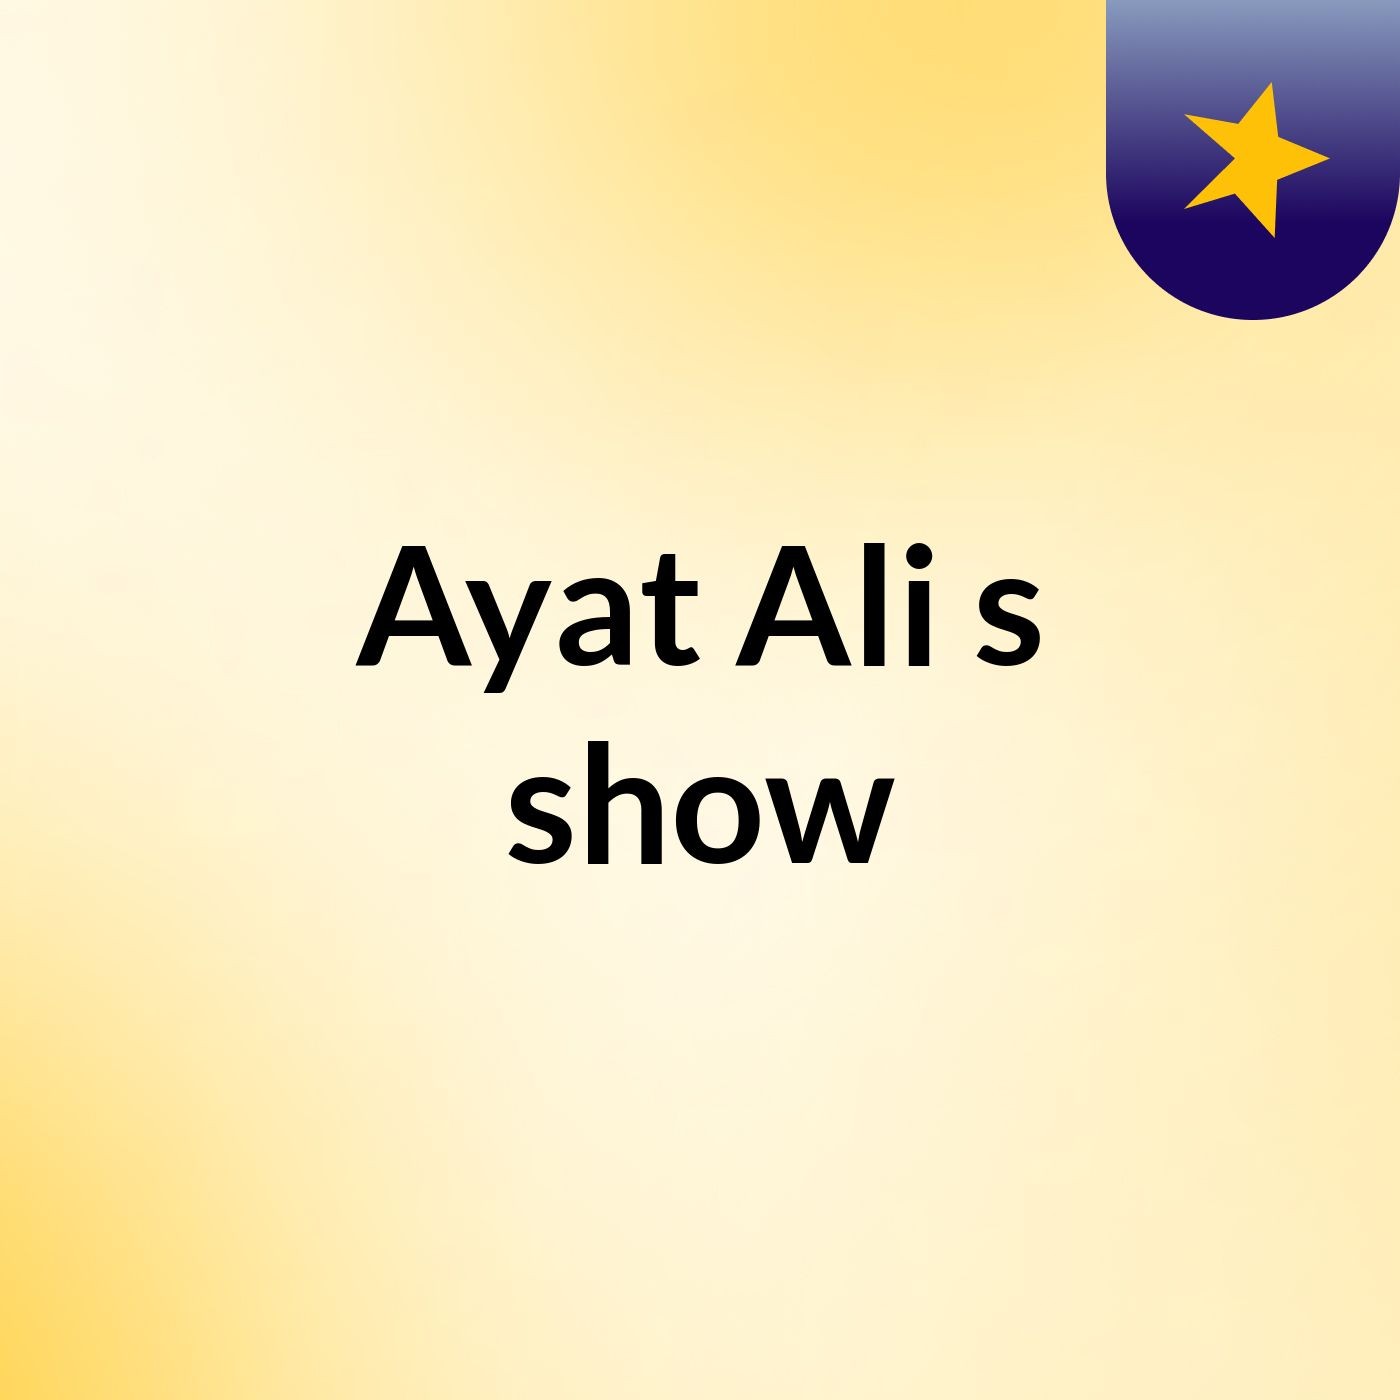 Ayat Ali's show